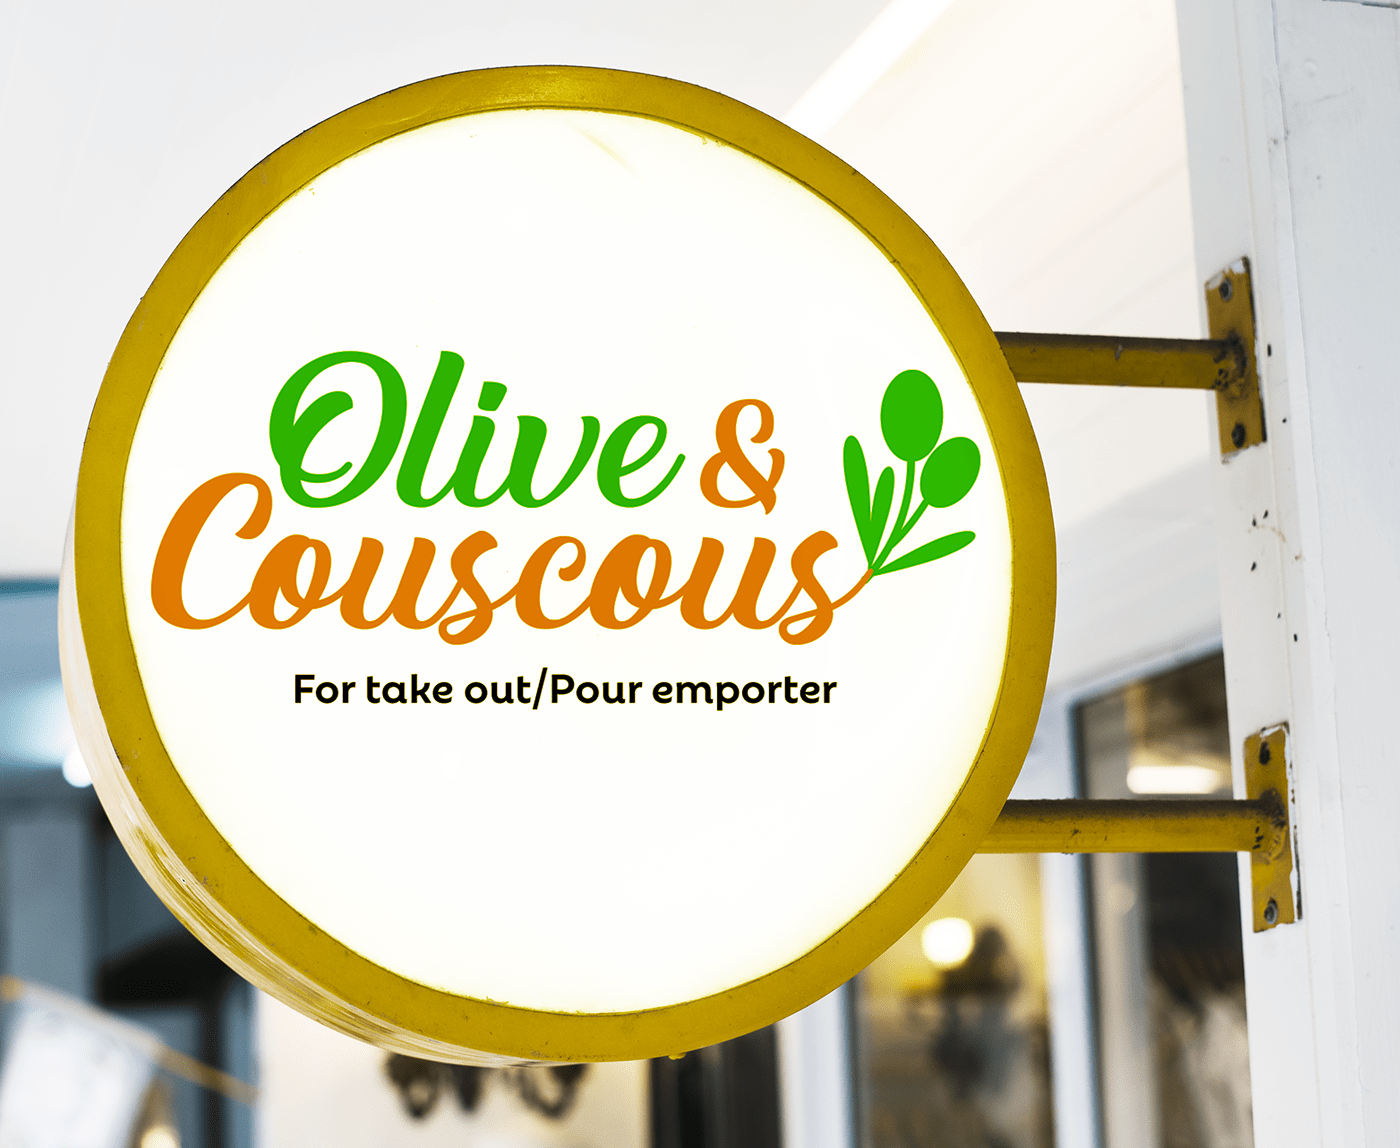 couscous couscous tunisien Food  food social media mediterranean tunisia marketing   mediterranean cuisine brand identity logo